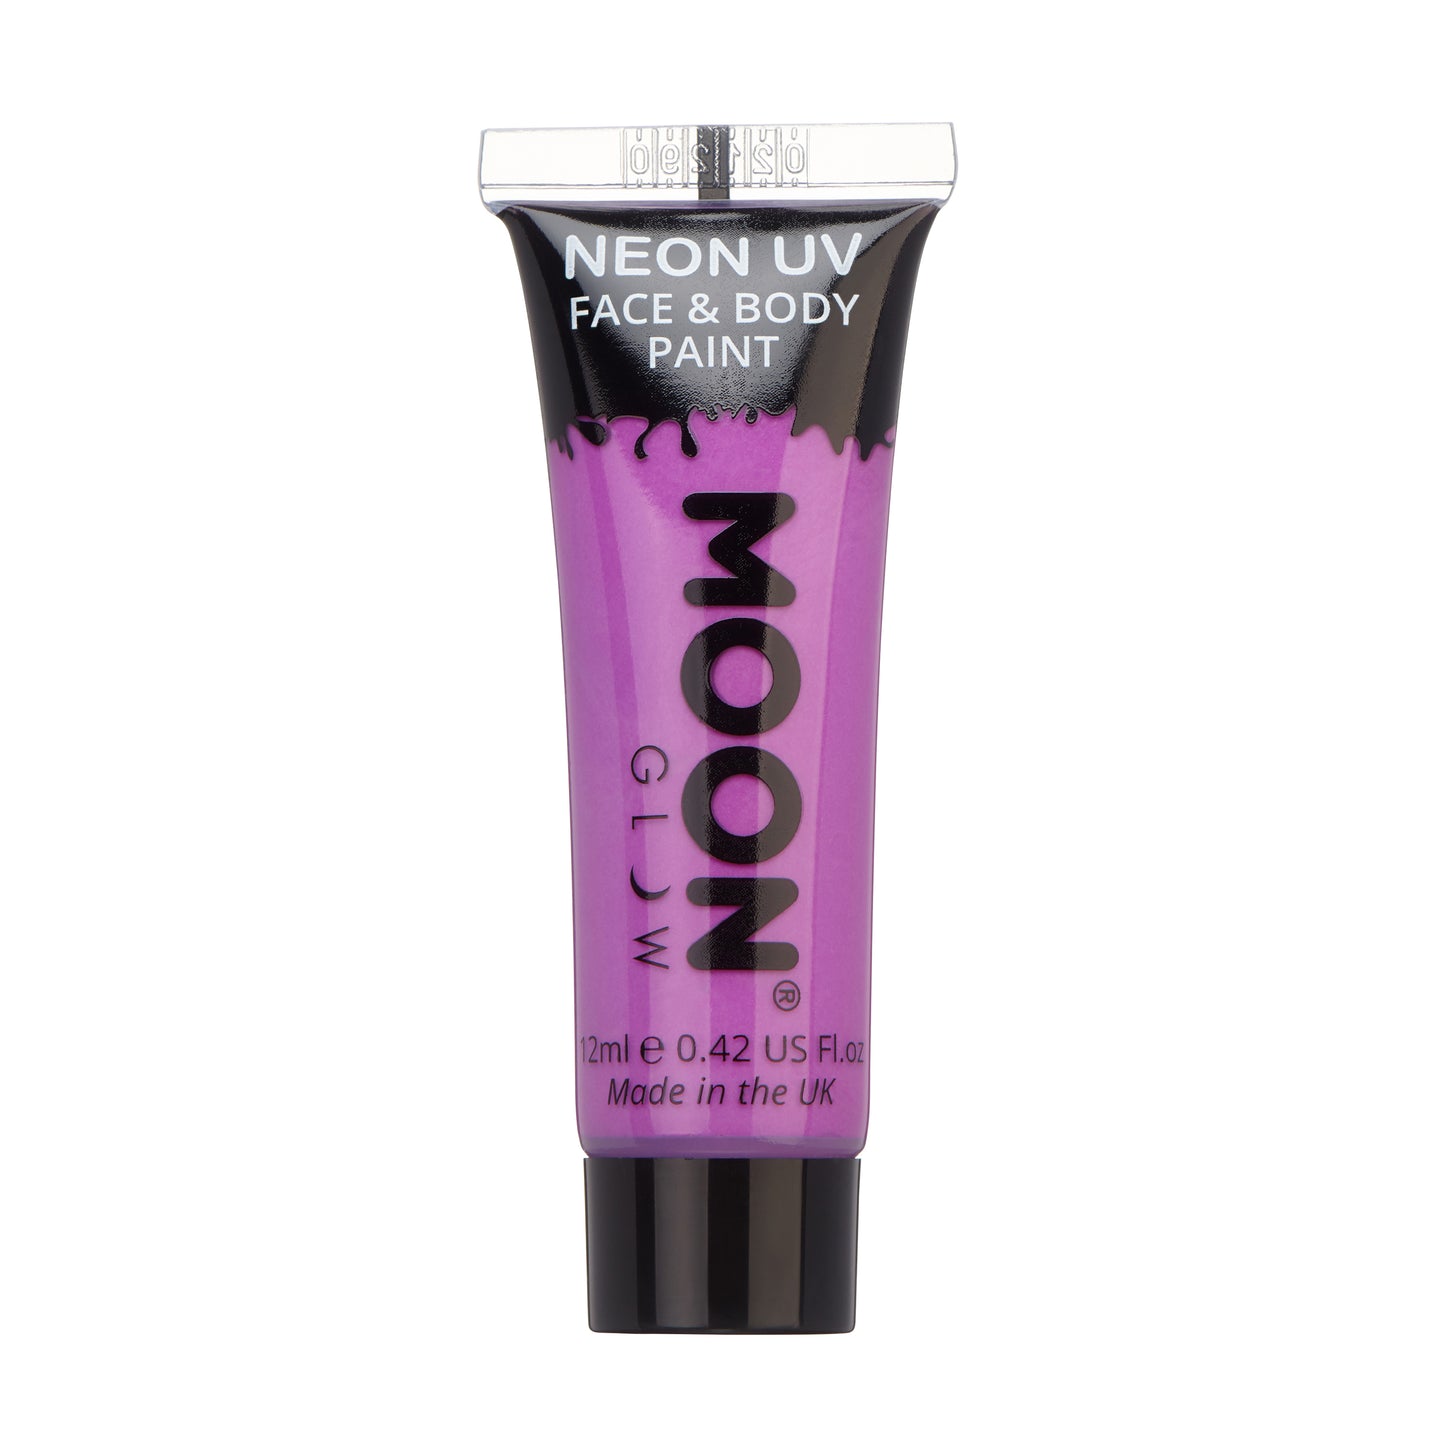 Neon UV Face & Body Paint Intense Purple